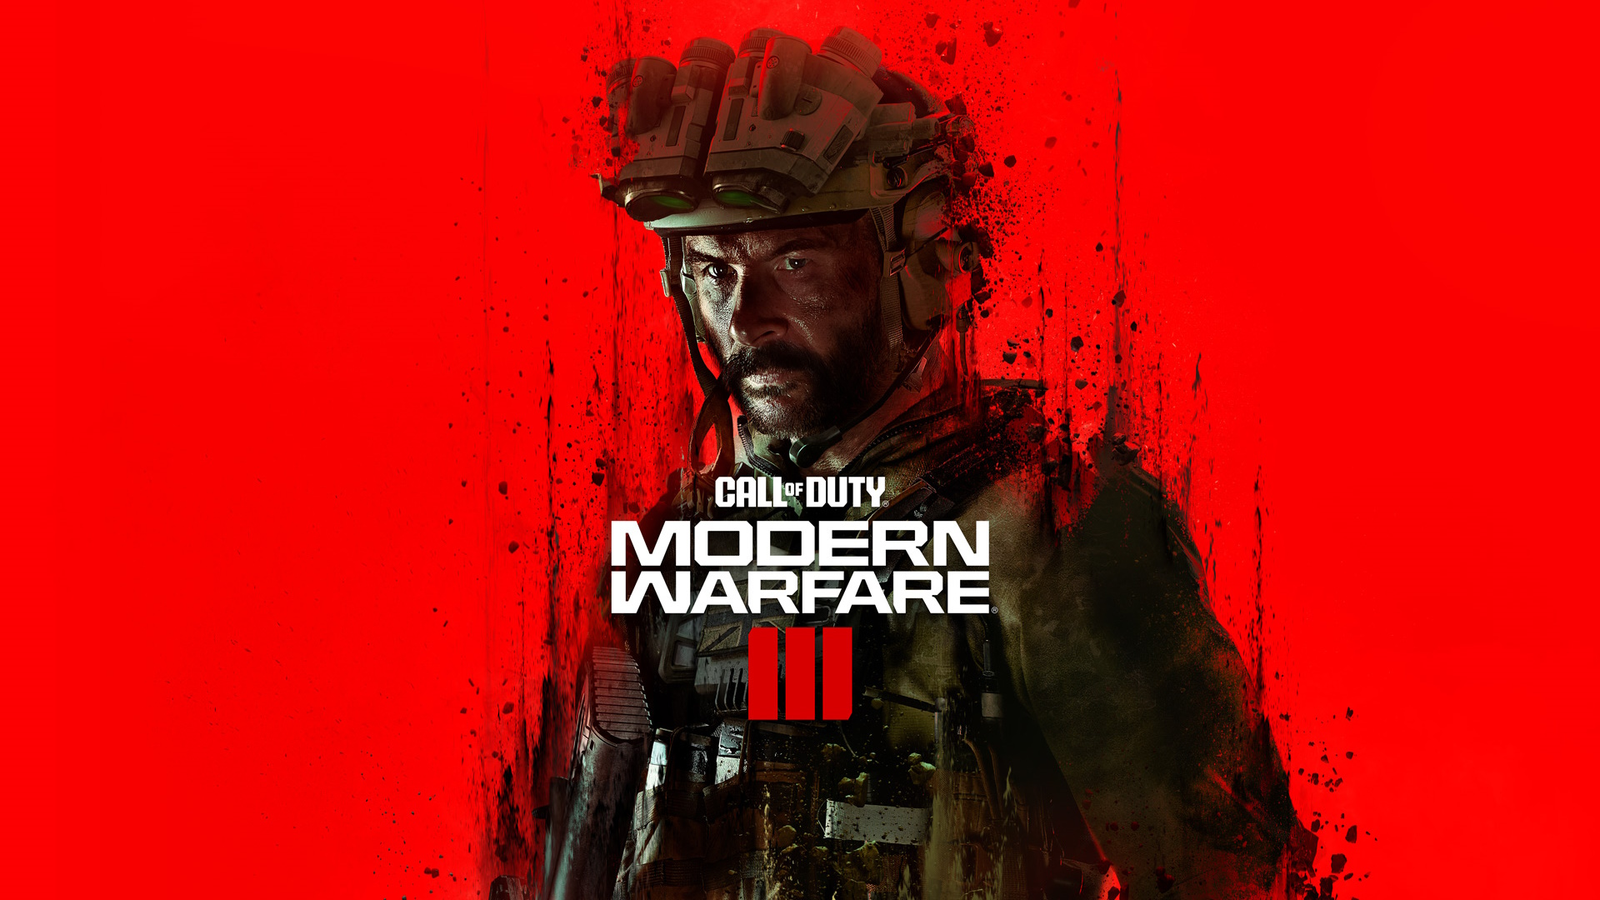 Call of Duty Modern Warfare 3 III Beta Early Access Key Code COD